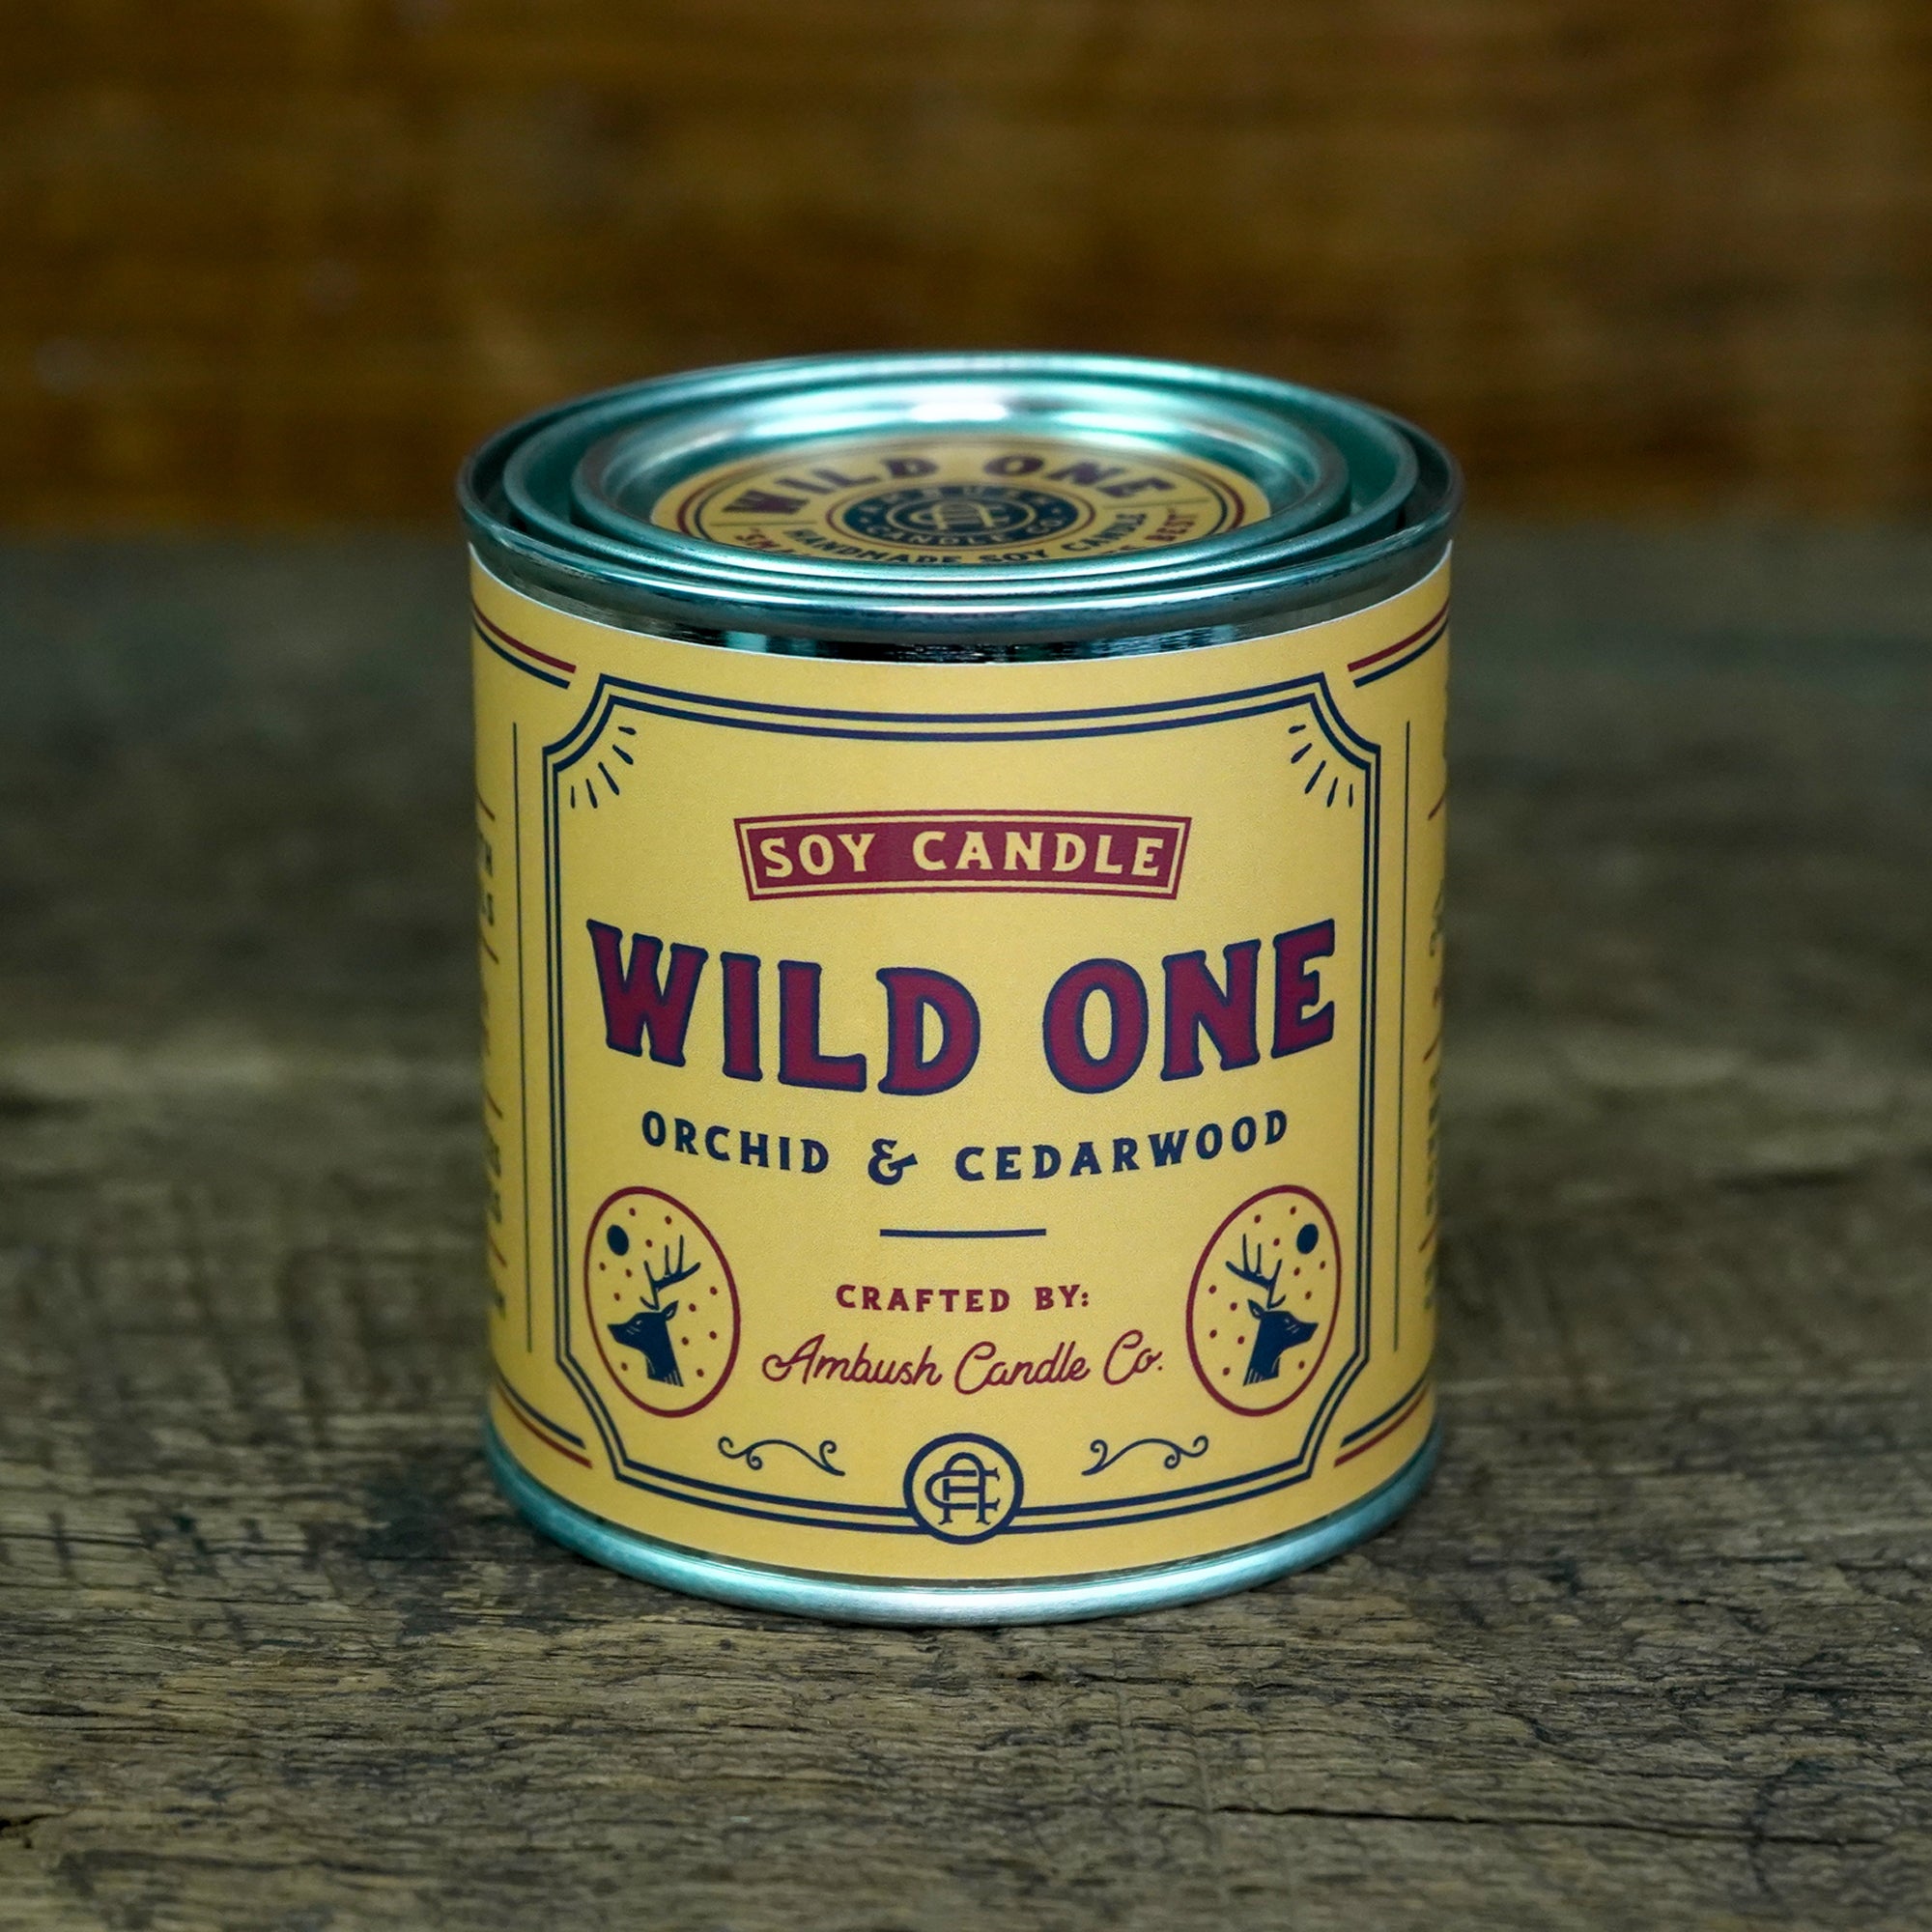 Ambush Candle Co. 8oz 'Wild One' Soy Candle - Orchid / Cedarwood